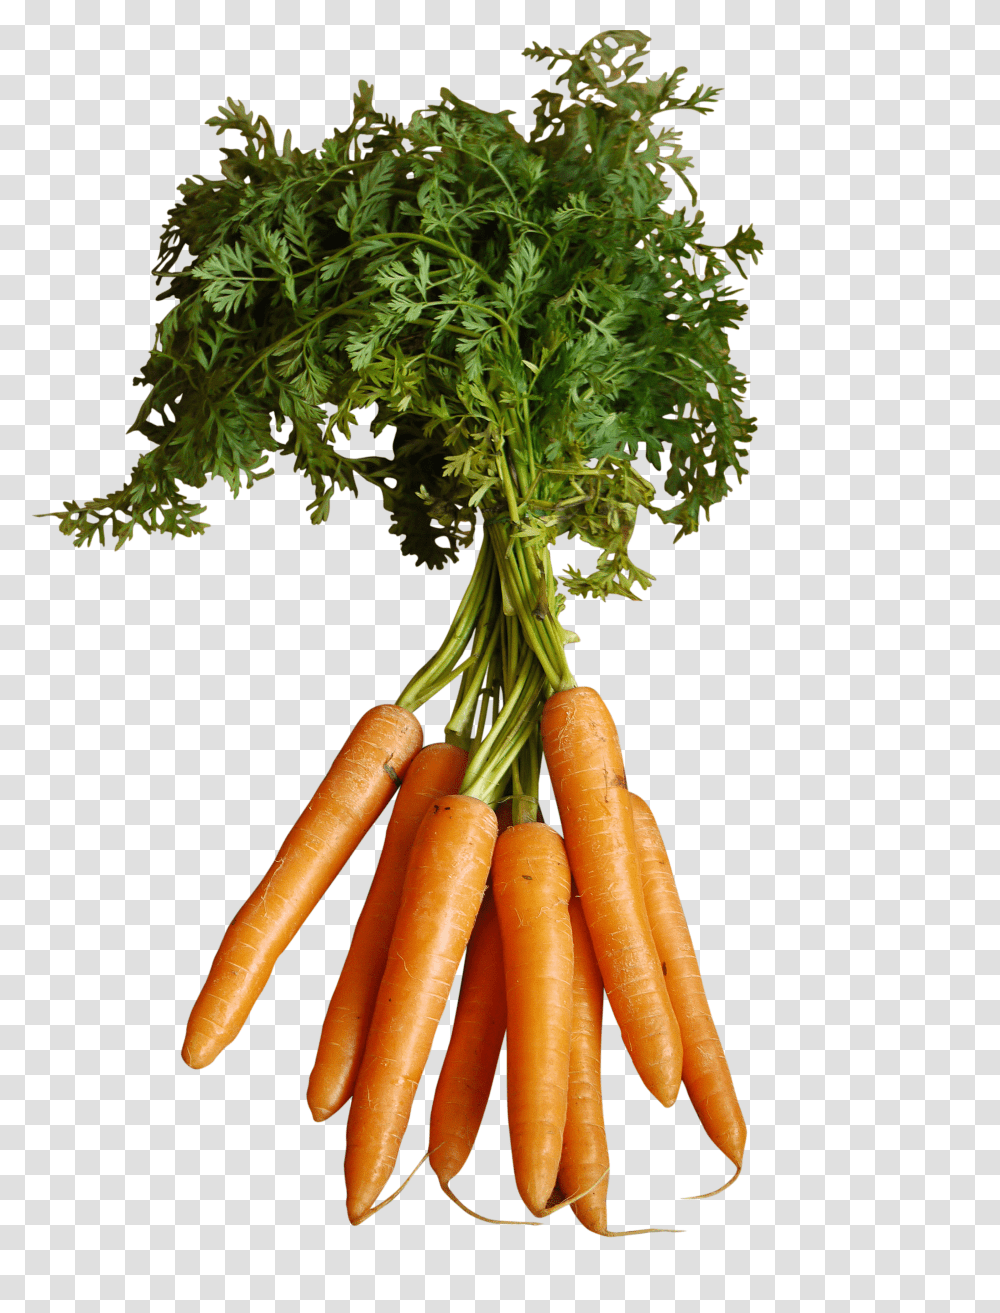 Orange Carrots With Stem Image Purepng Free Transparent Png